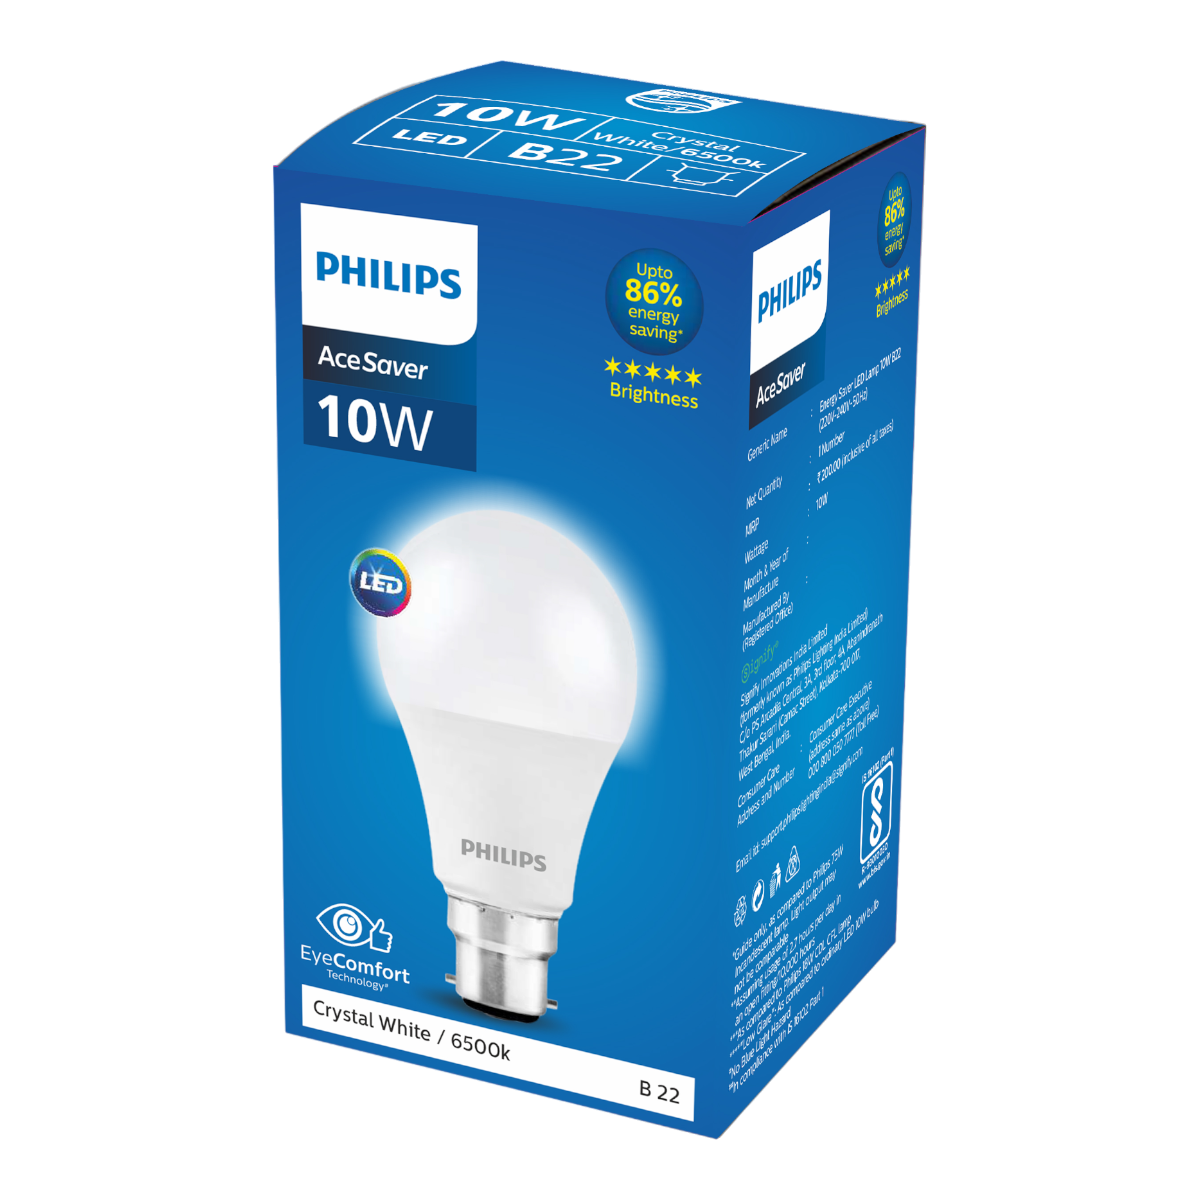 Philips Ace Saver LED Bulb